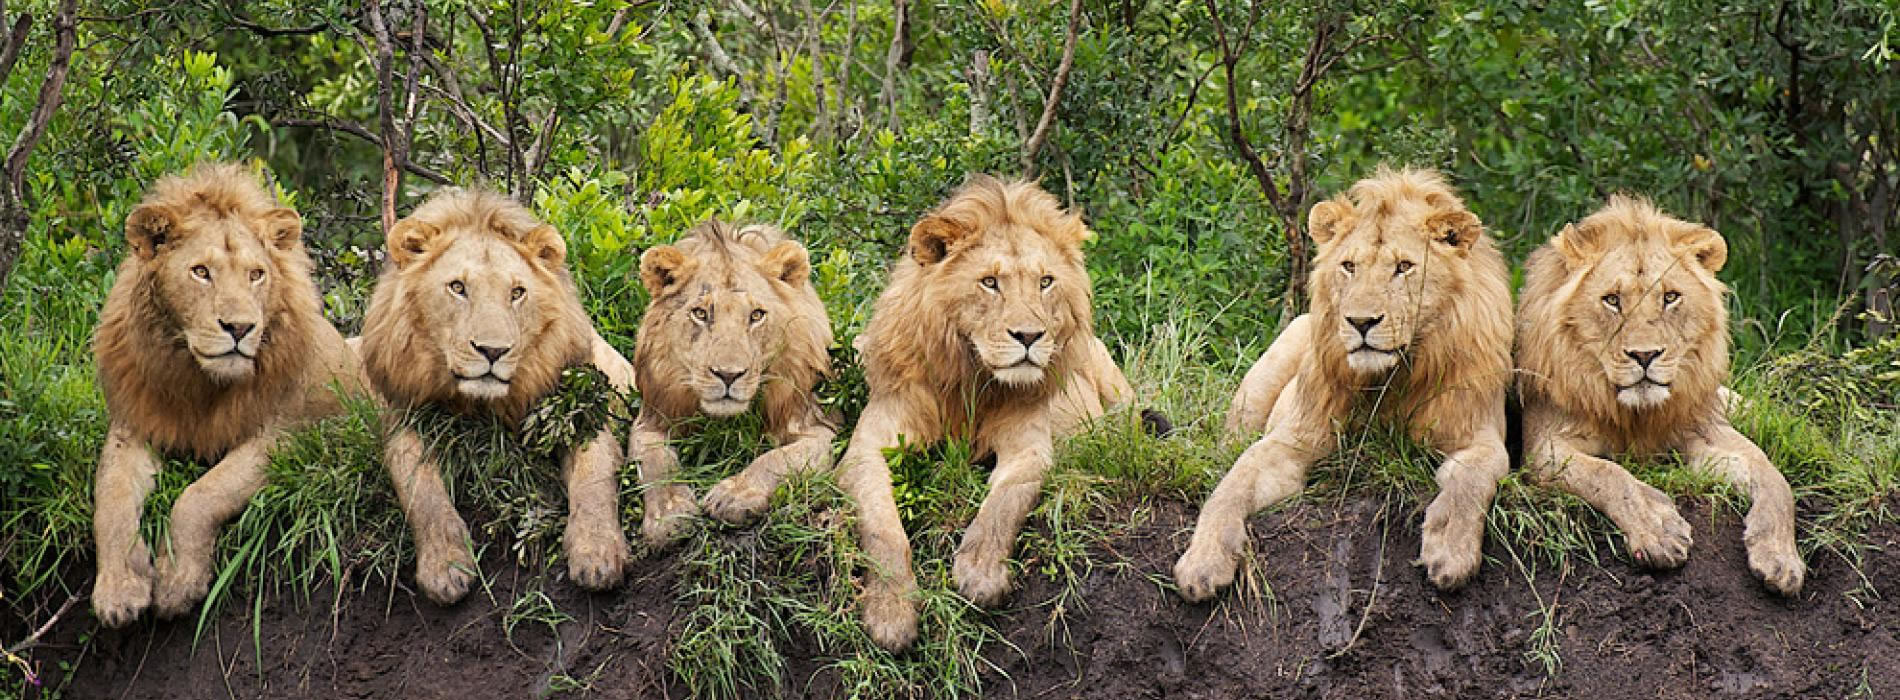 Wildlife in Serengeti